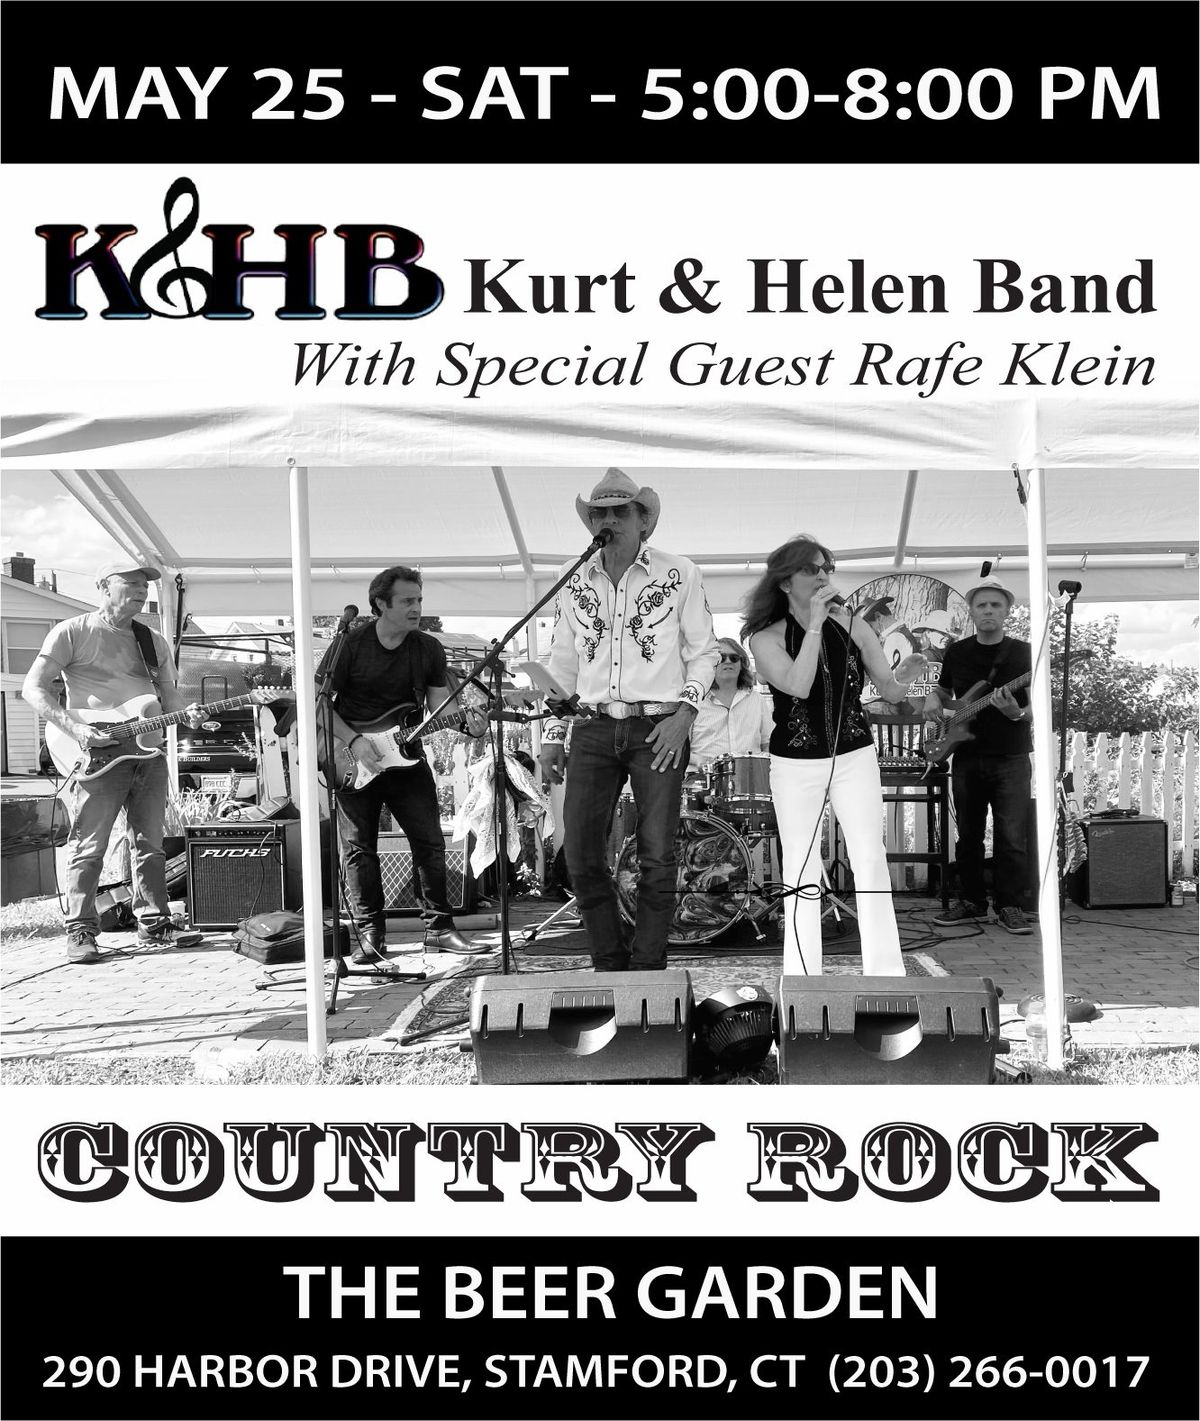 Kurt & Helen Band at The Beer Garden, Stamford, CT